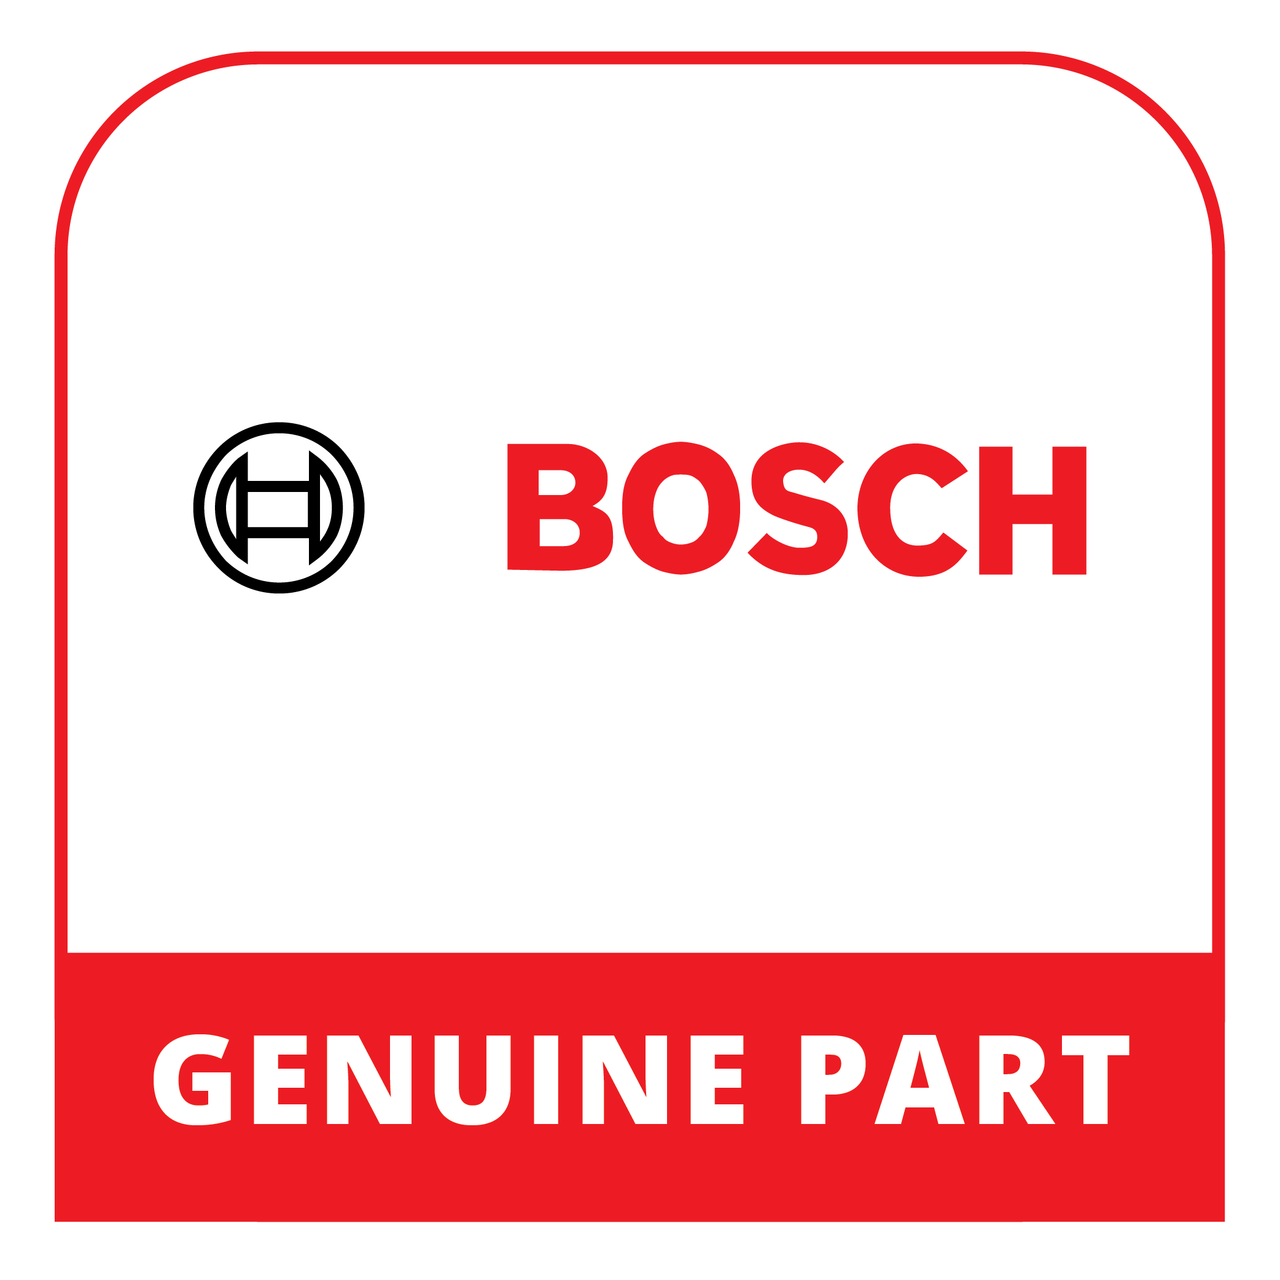 Bosch 00682646 - Glass Ceramic Hob To - Genuine Bosch (Thermador) Part